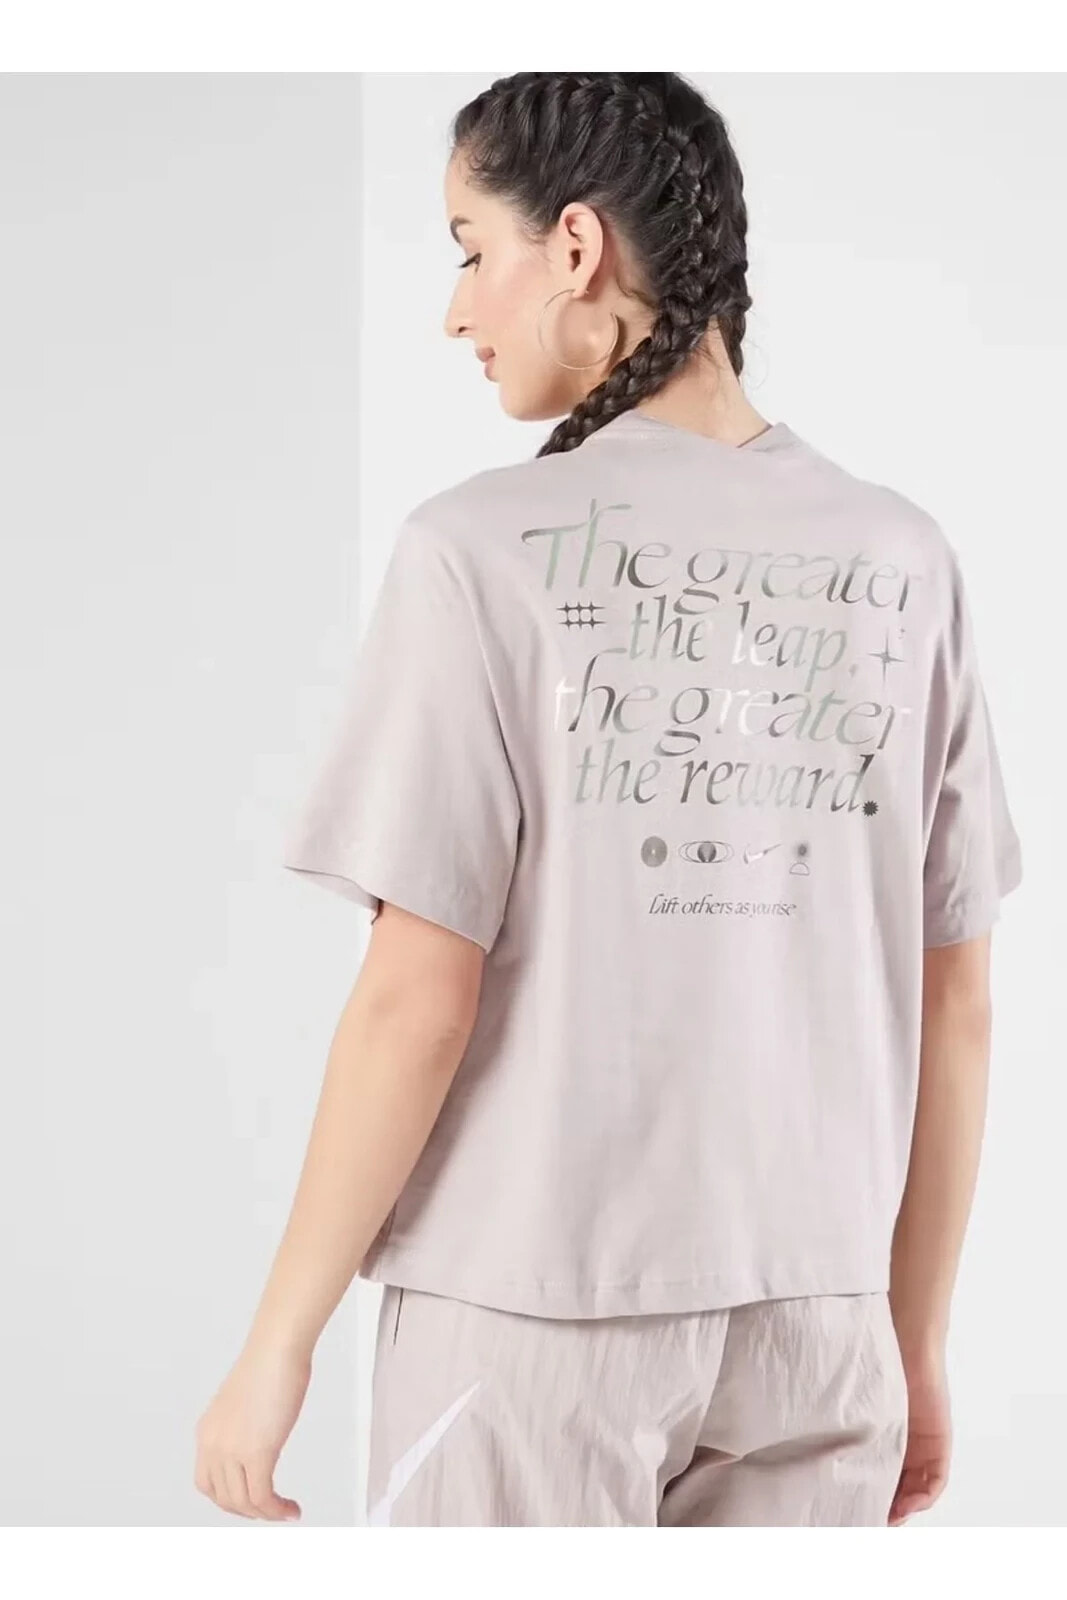 Sportswear ''Lift Others as Your Rise'' 3 Boxy Short-Sleeve Kadın Tişört